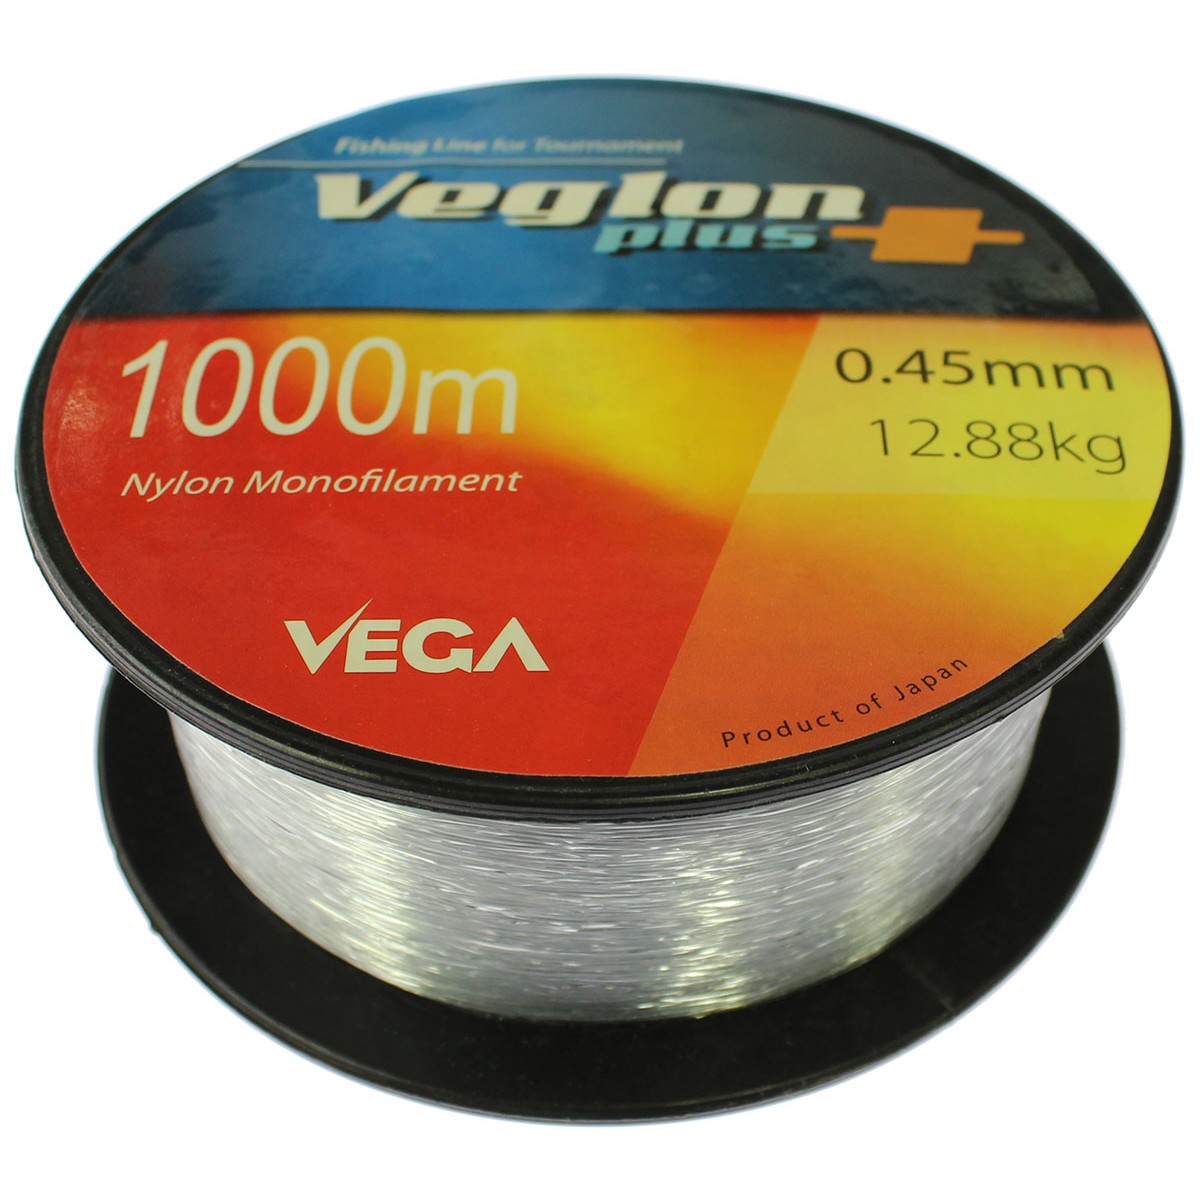 риболовно влакно Vega Veglon Plus 1000m